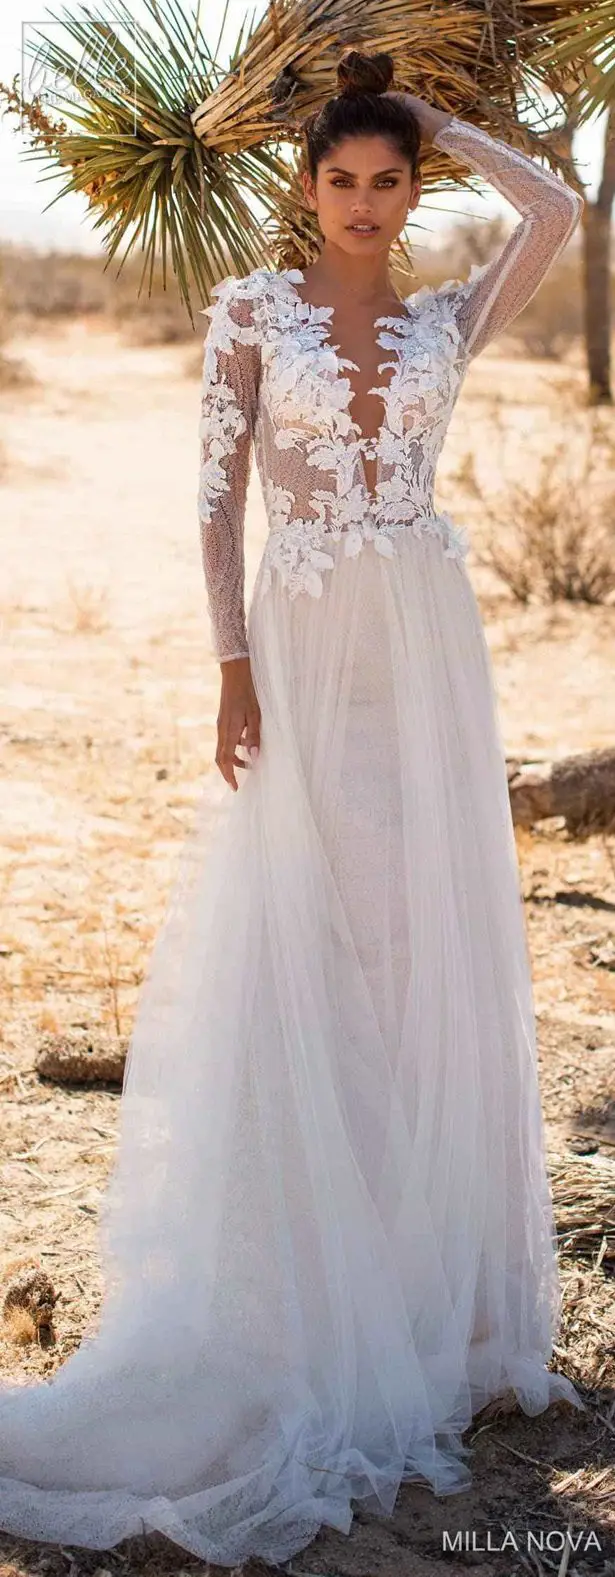 Milla Nova Wedding Dresses 2019 - California Dream Collection - Mirren